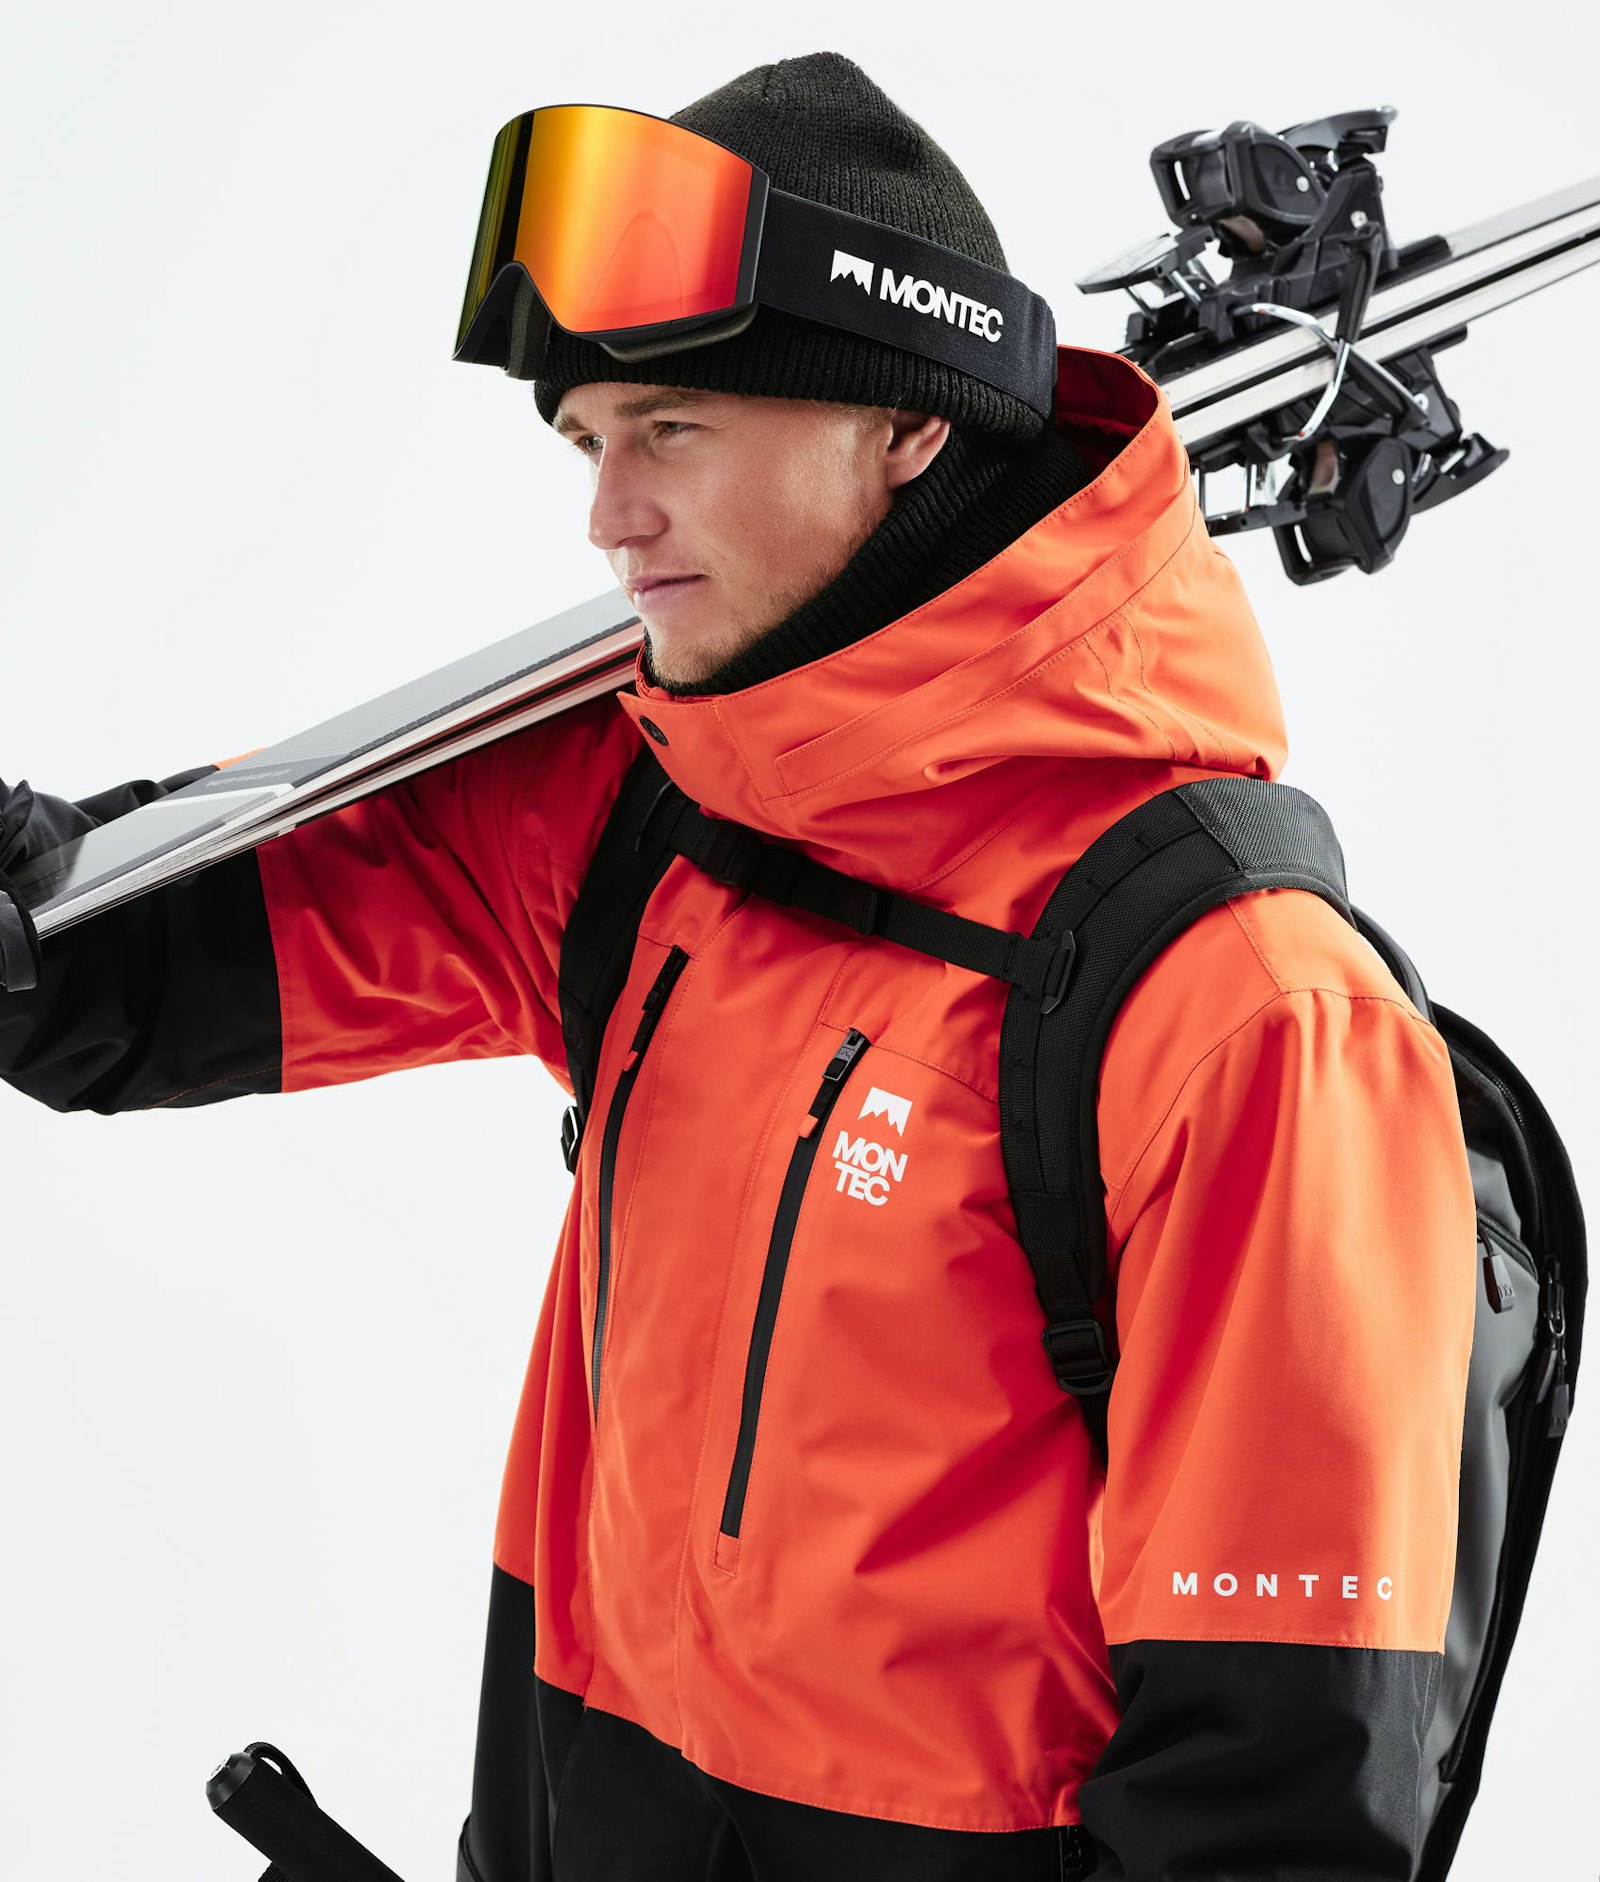 Fawk 2021 Ski jas Heren Orange/Black